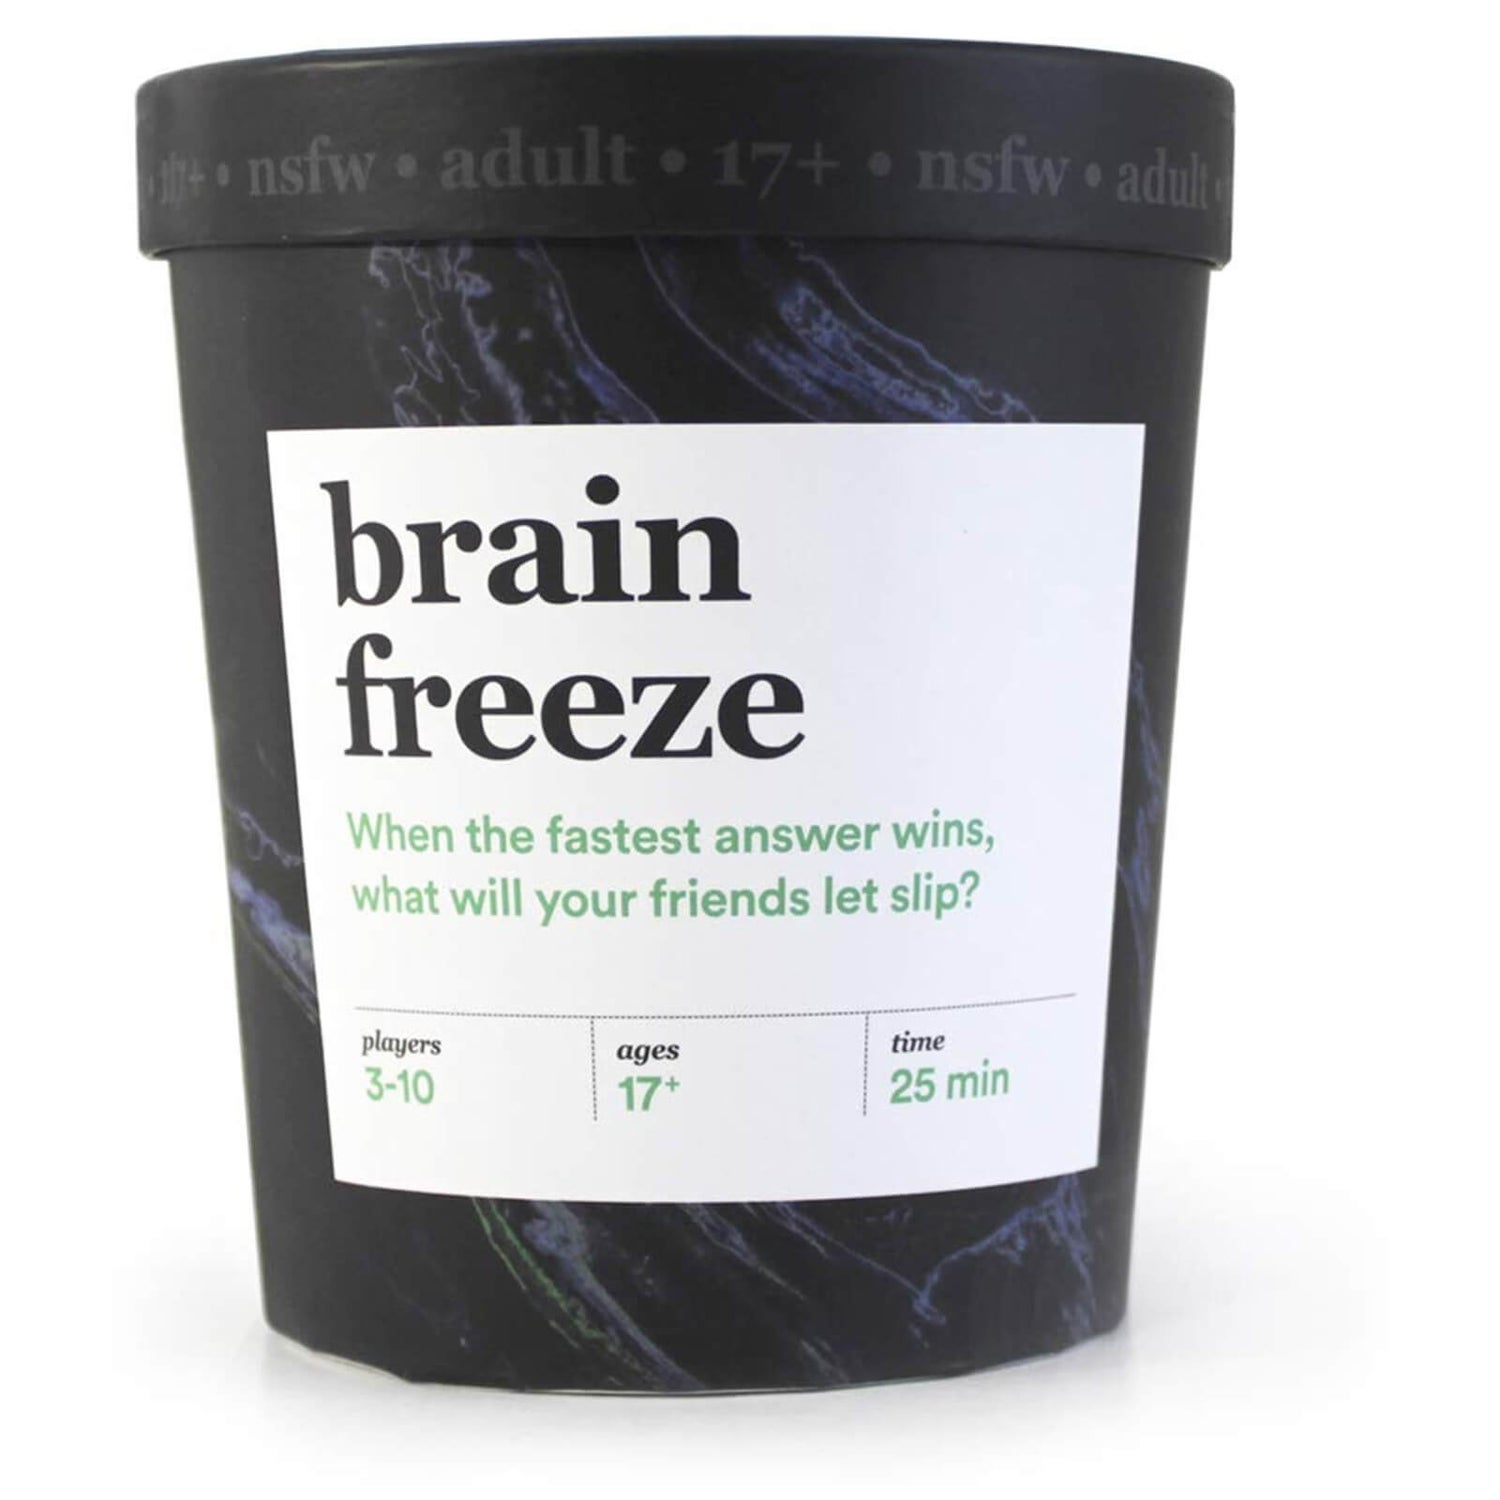 Brain freeze